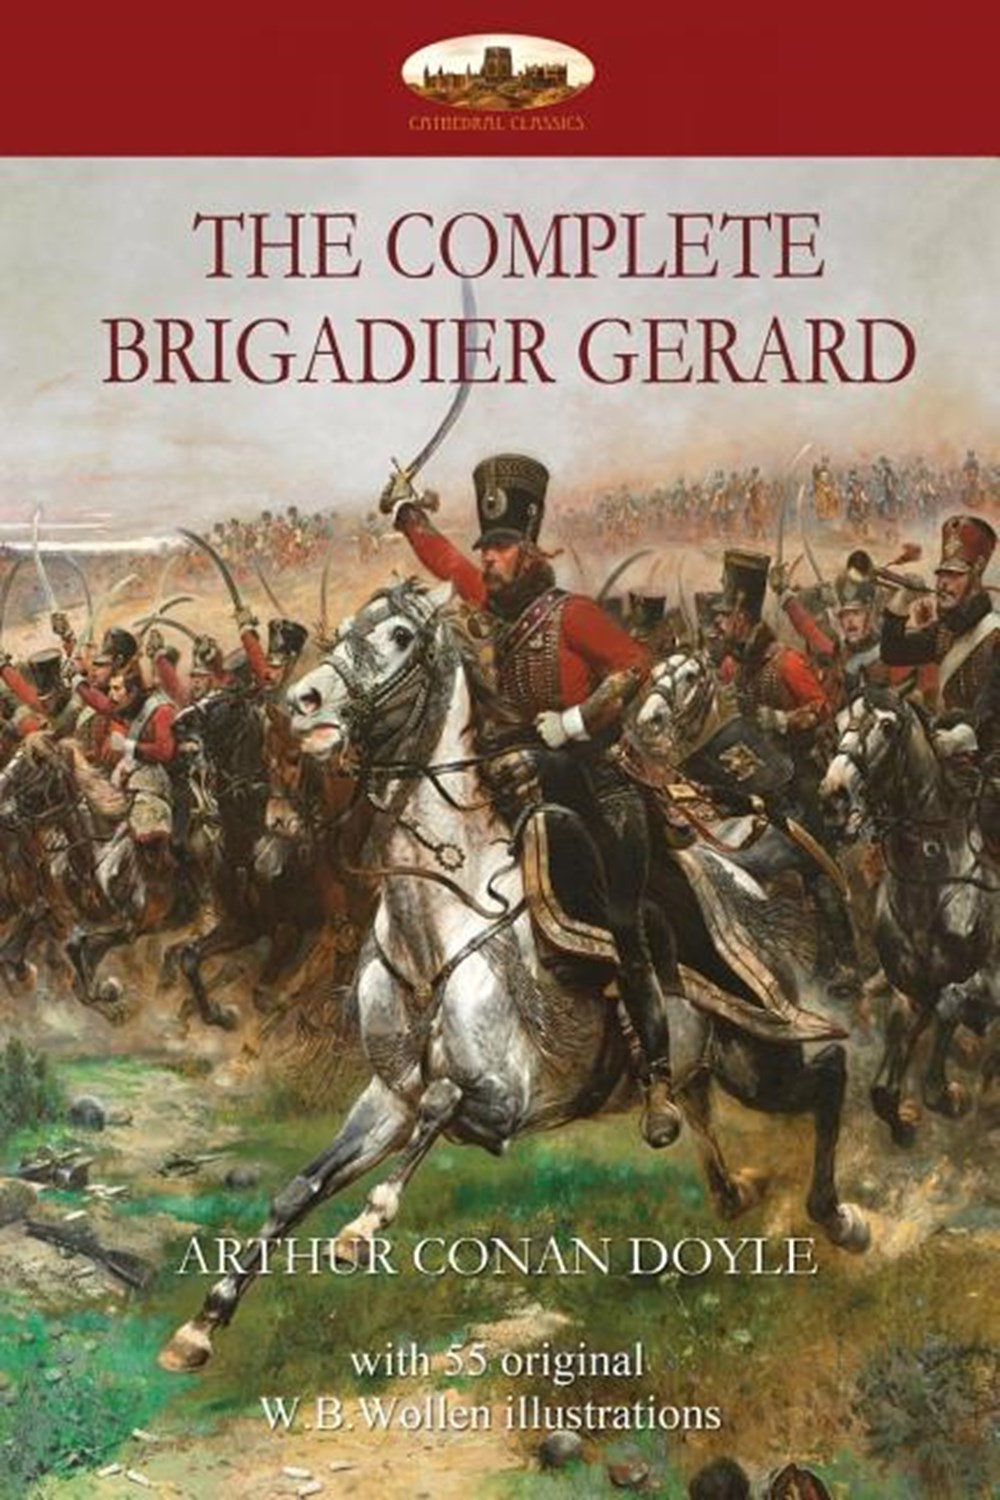 Complete Brigadier Gerard with 55 original illustrations by W.B.Wollen